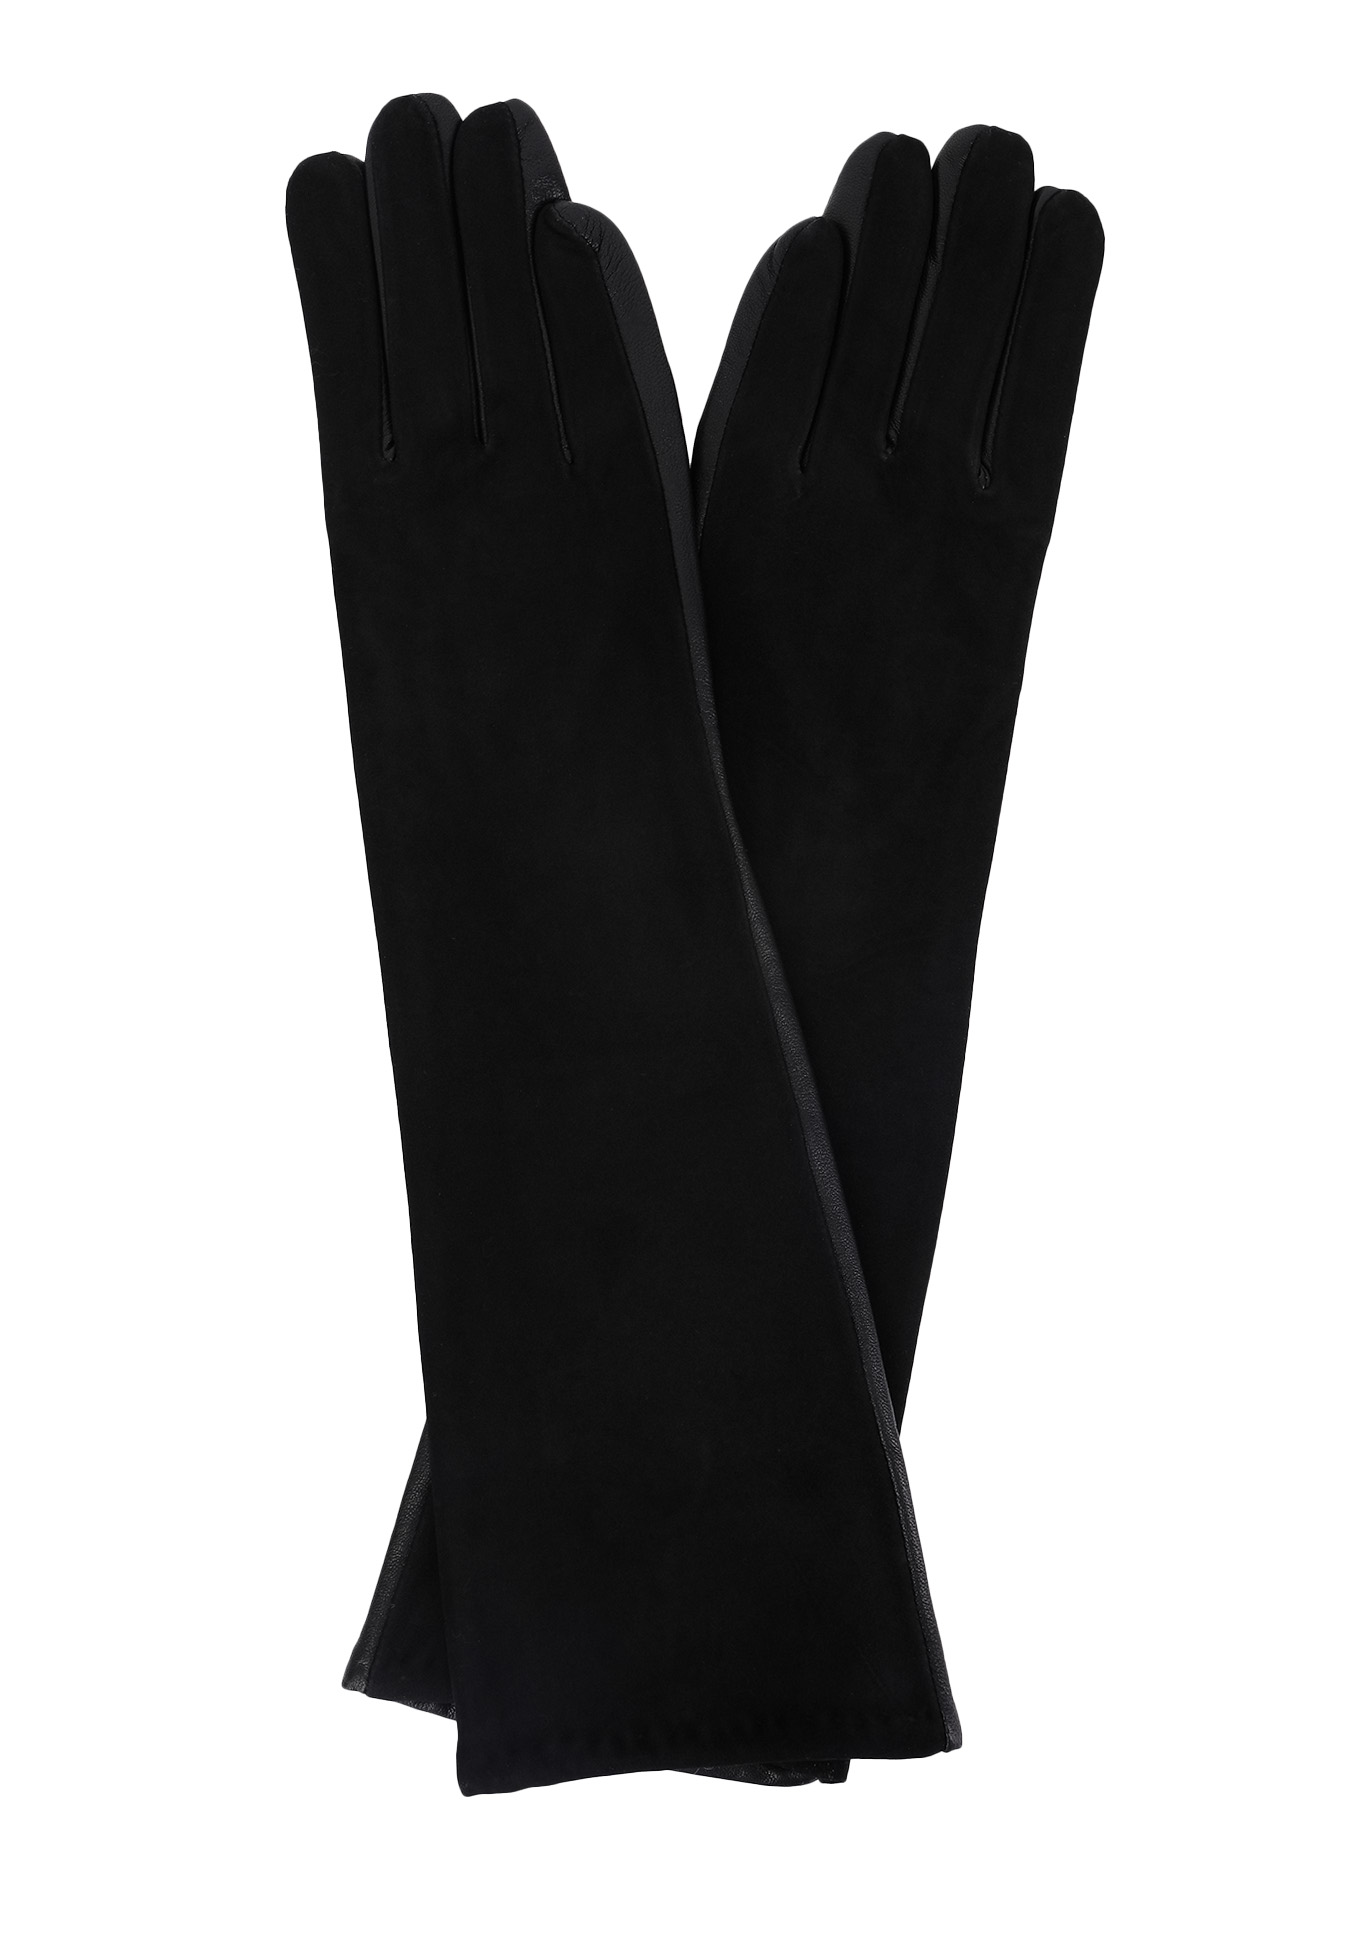 Перчатки "Роскошная дама", цвет черный, размер 6